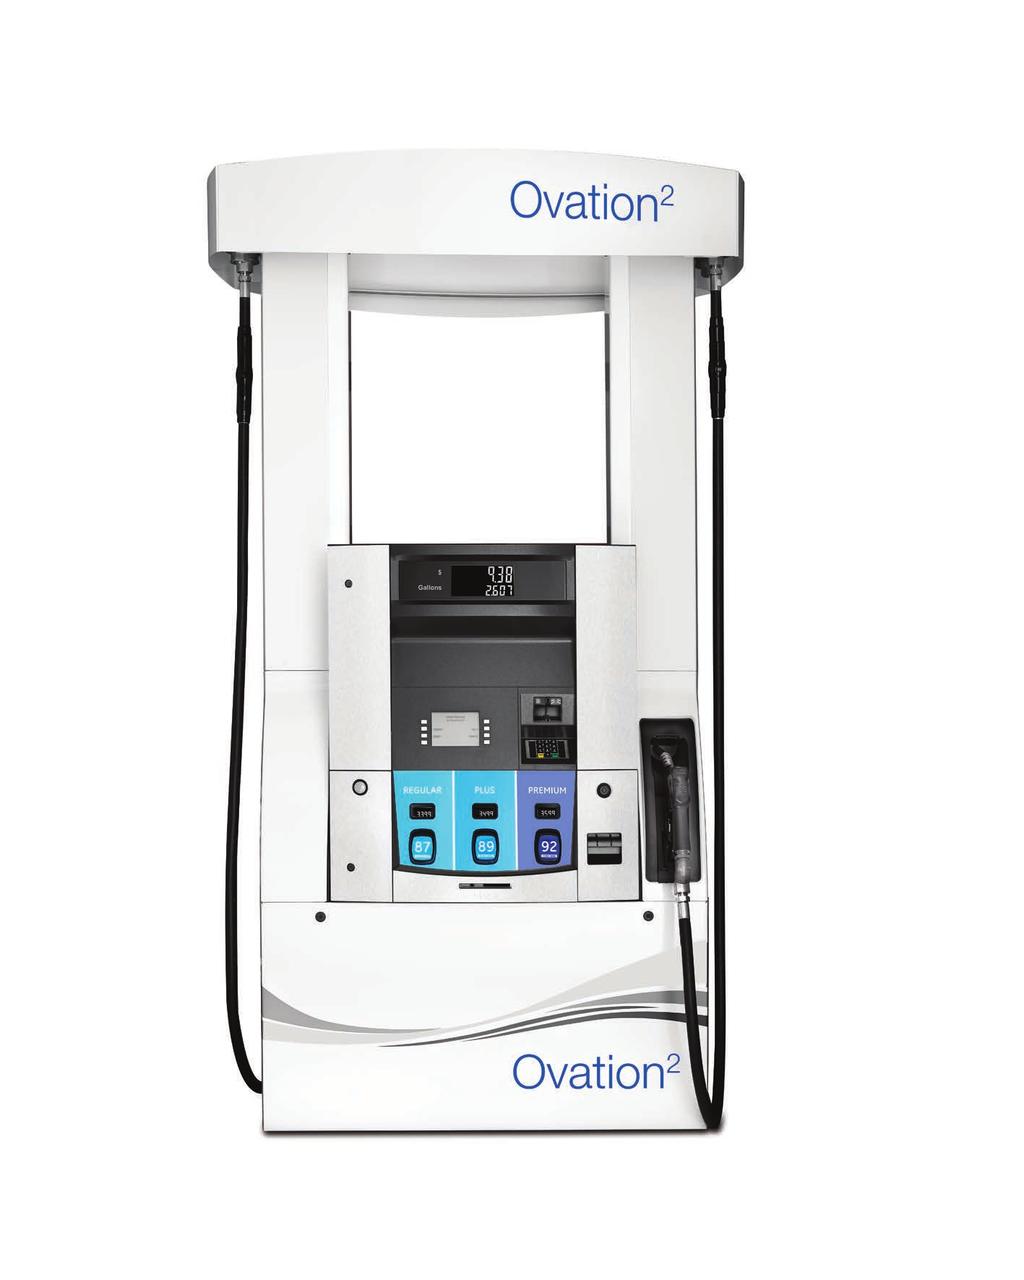 2 The Ovation 2 fuel dispenser